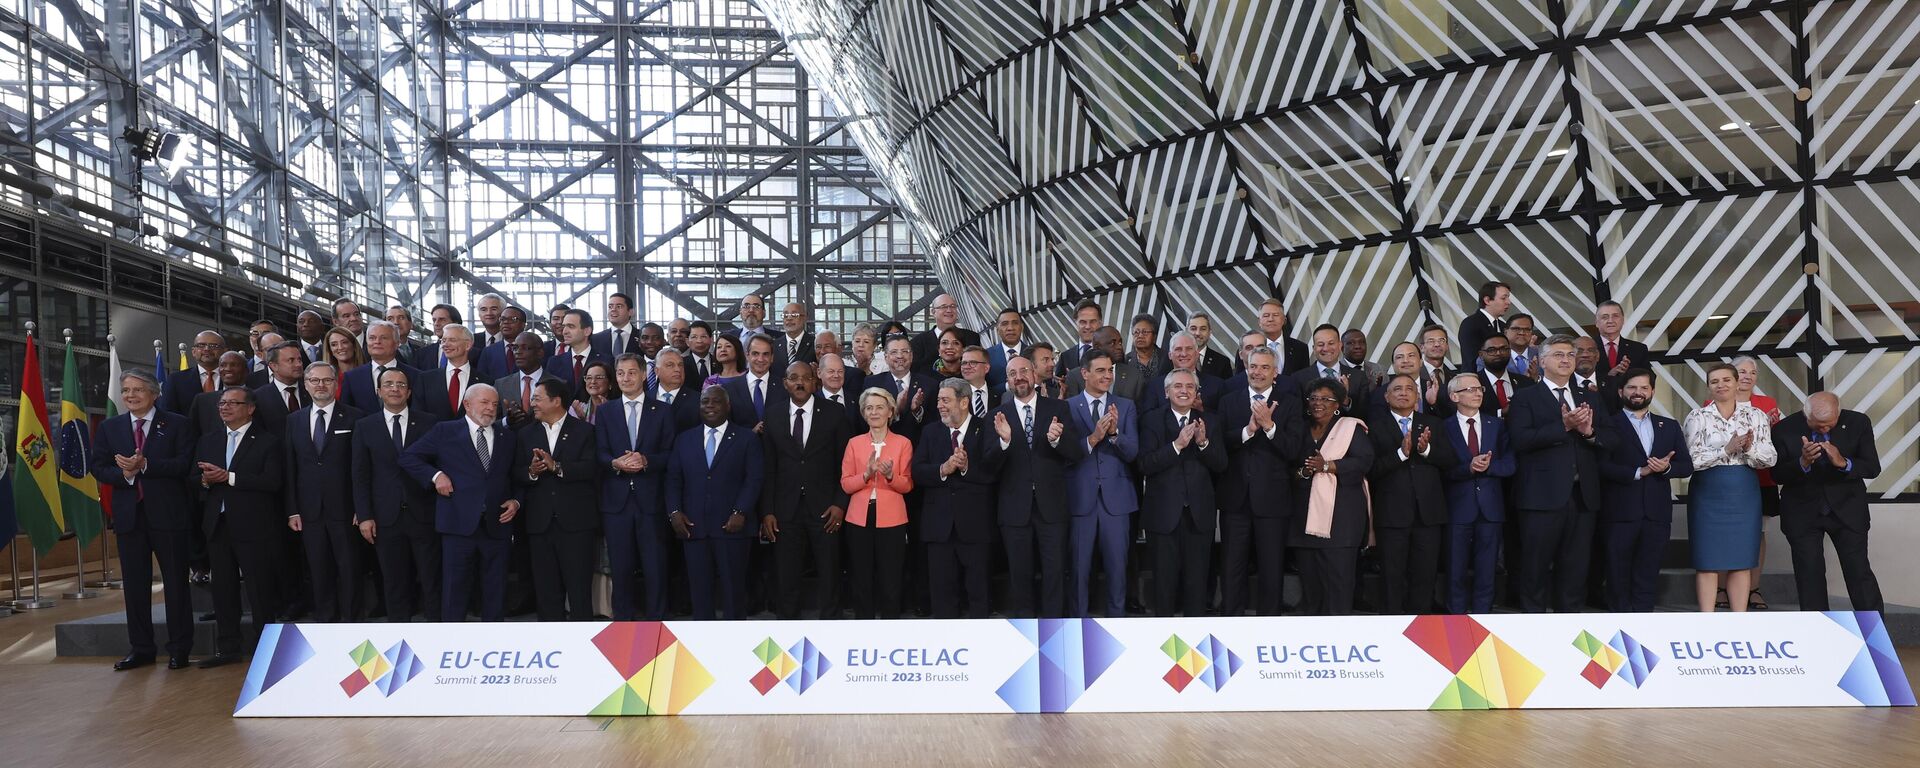 La Cumbre UE-CELAC se realizó en Bruselas, Bélgica. - Sputnik Mundo, 1920, 19.07.2023